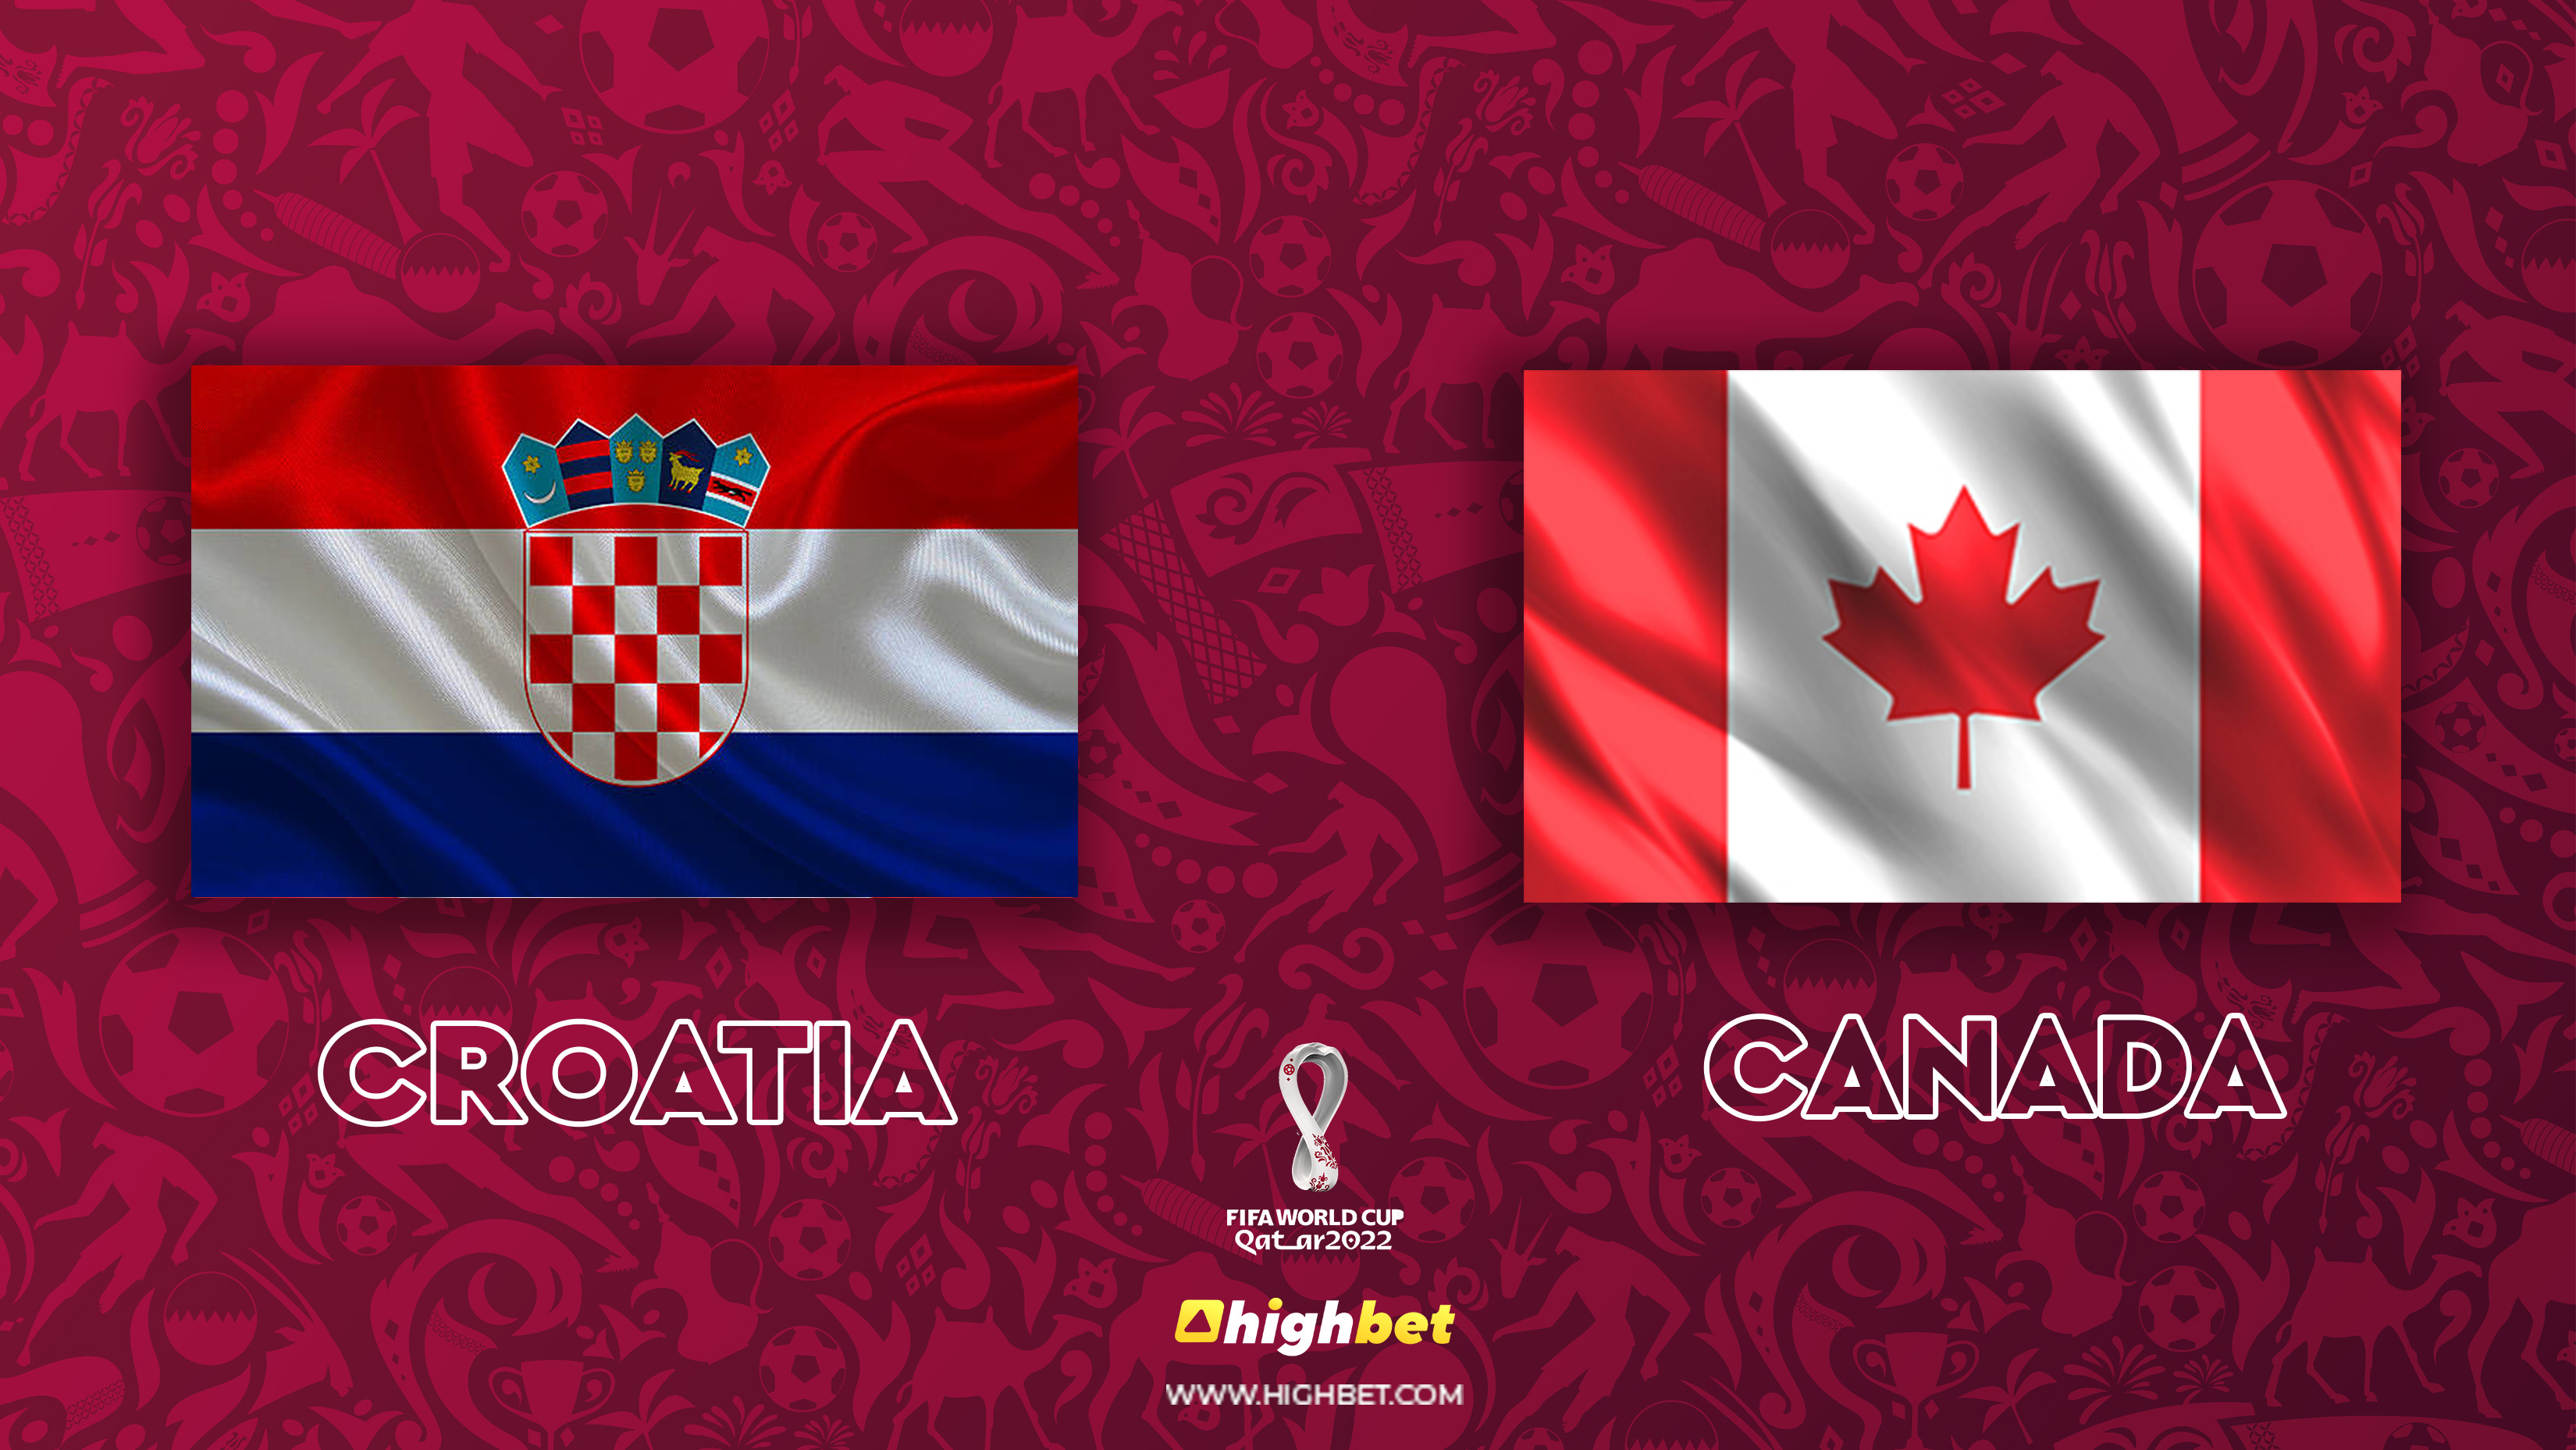 Croatia vs Canada - highbet World Cup 2022 Pre-Match Analysis